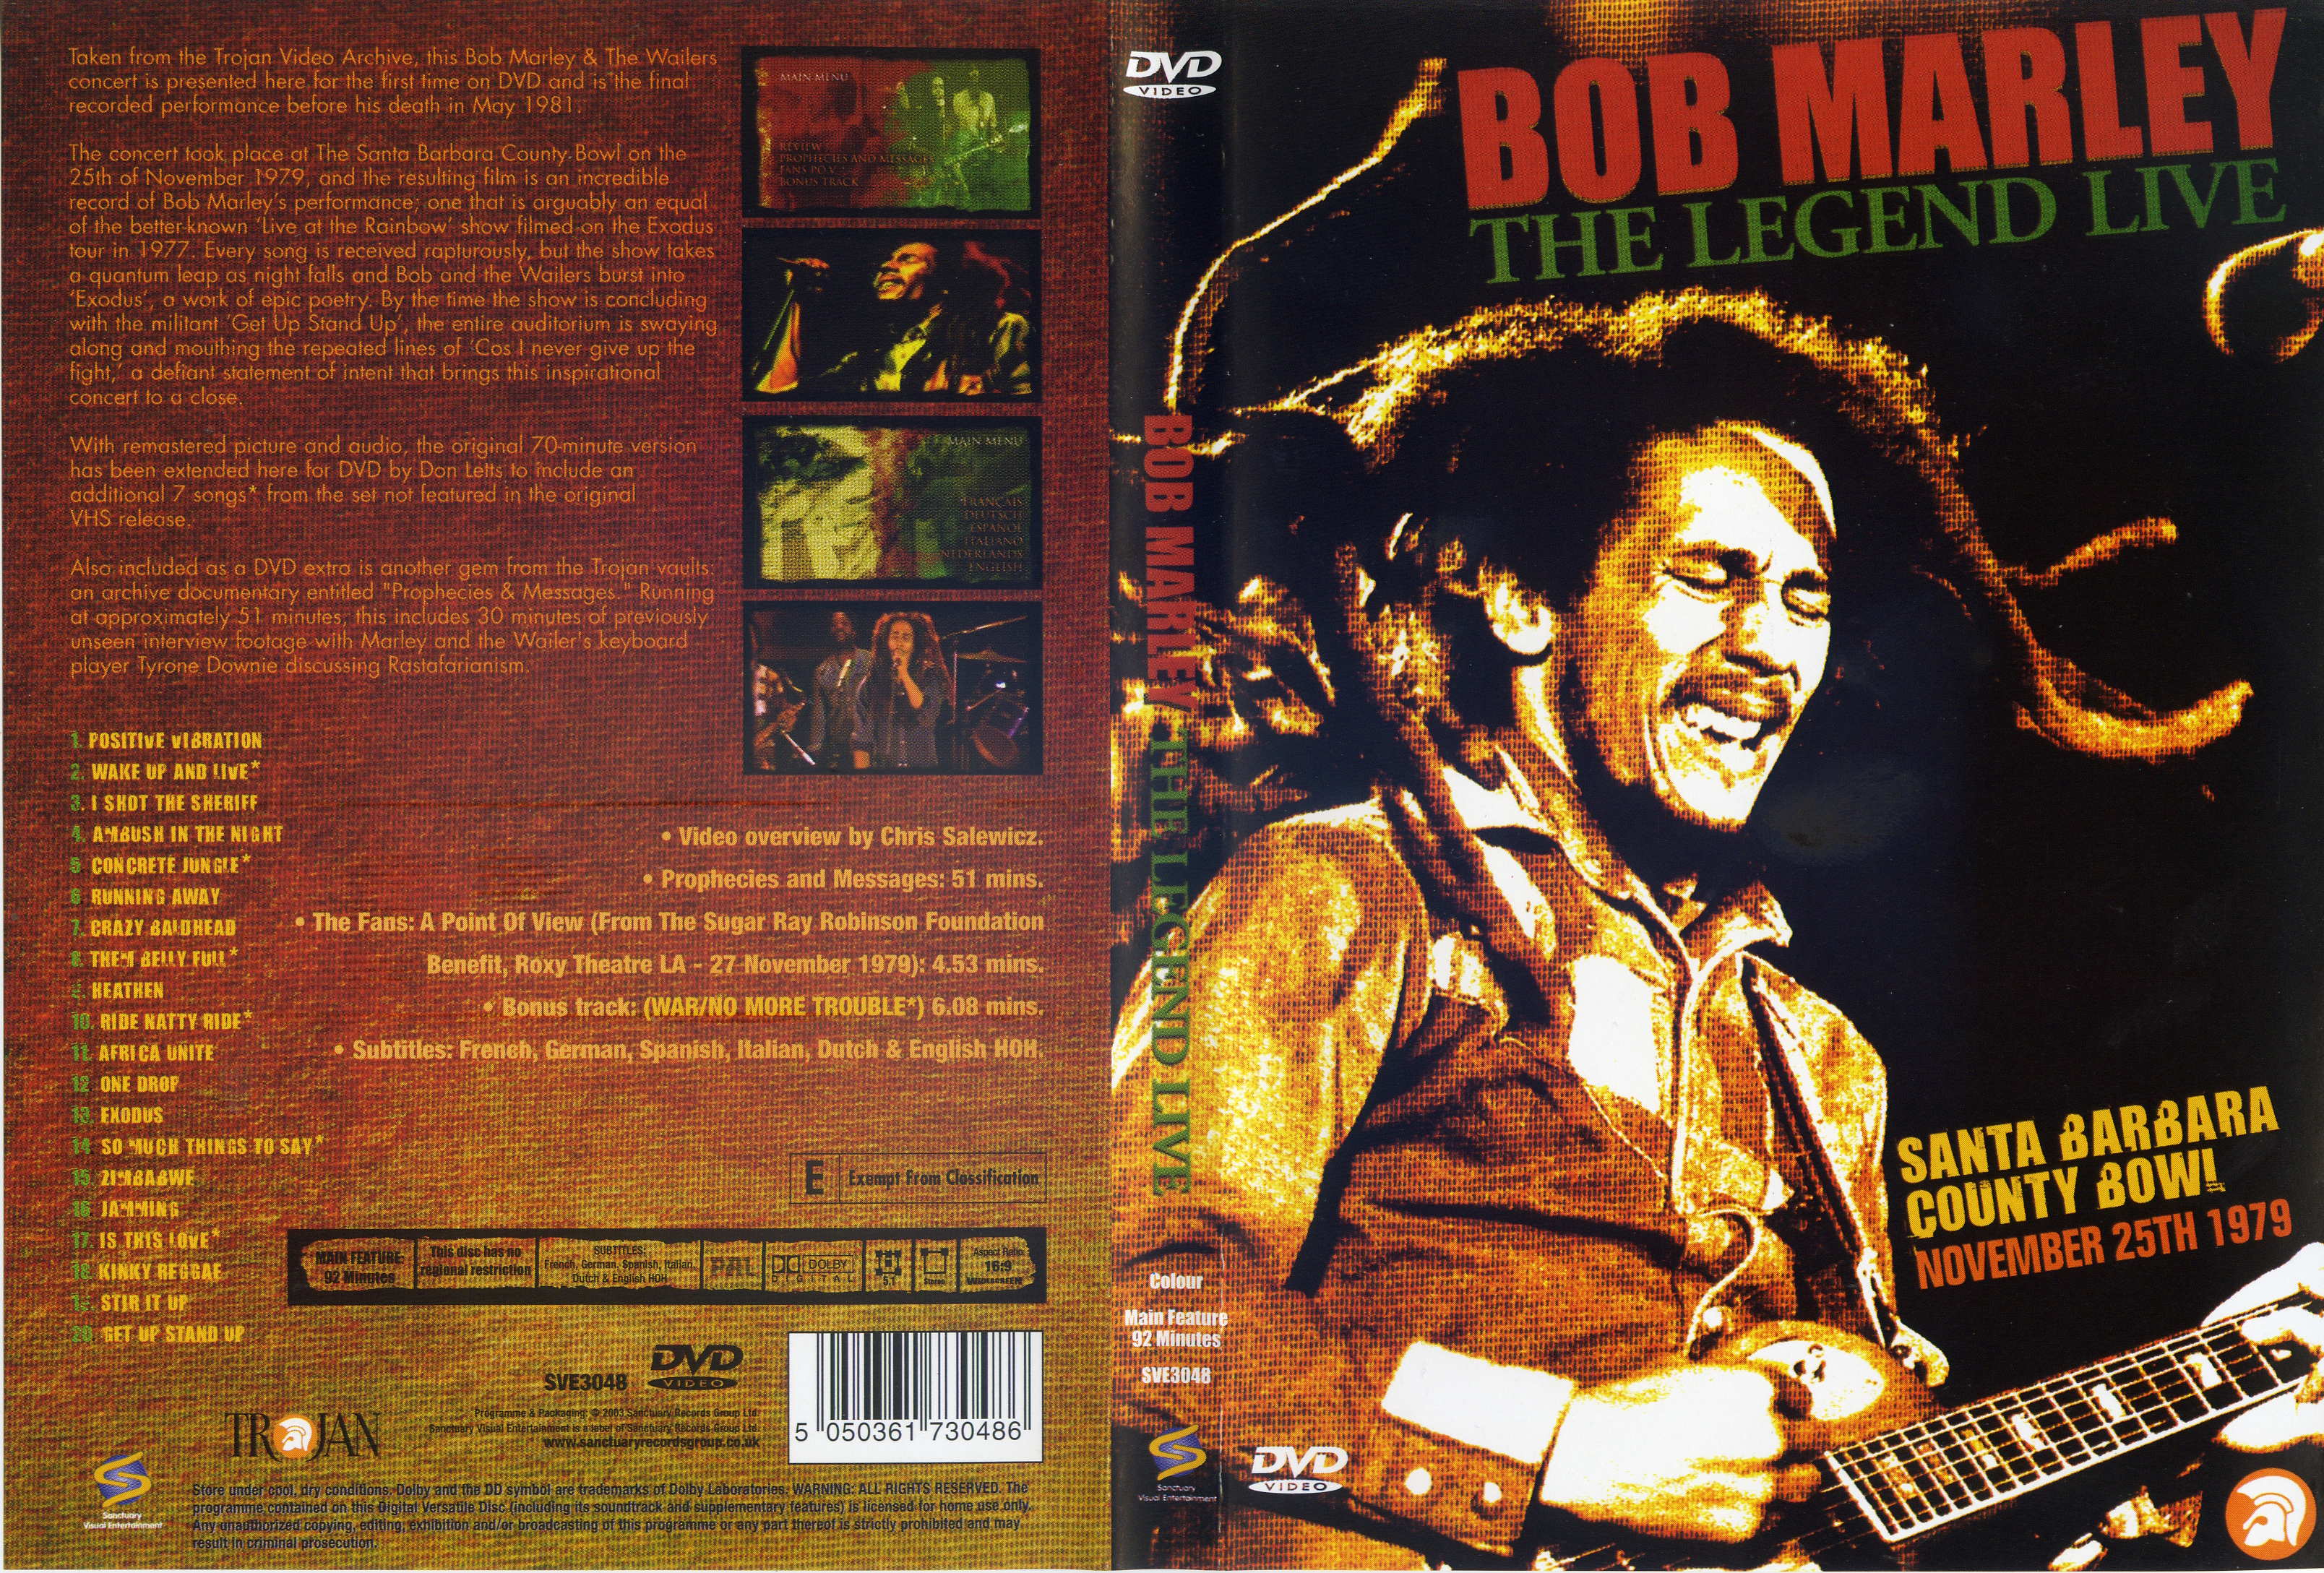 Jaquette DVD Bob Marley The Legend Live